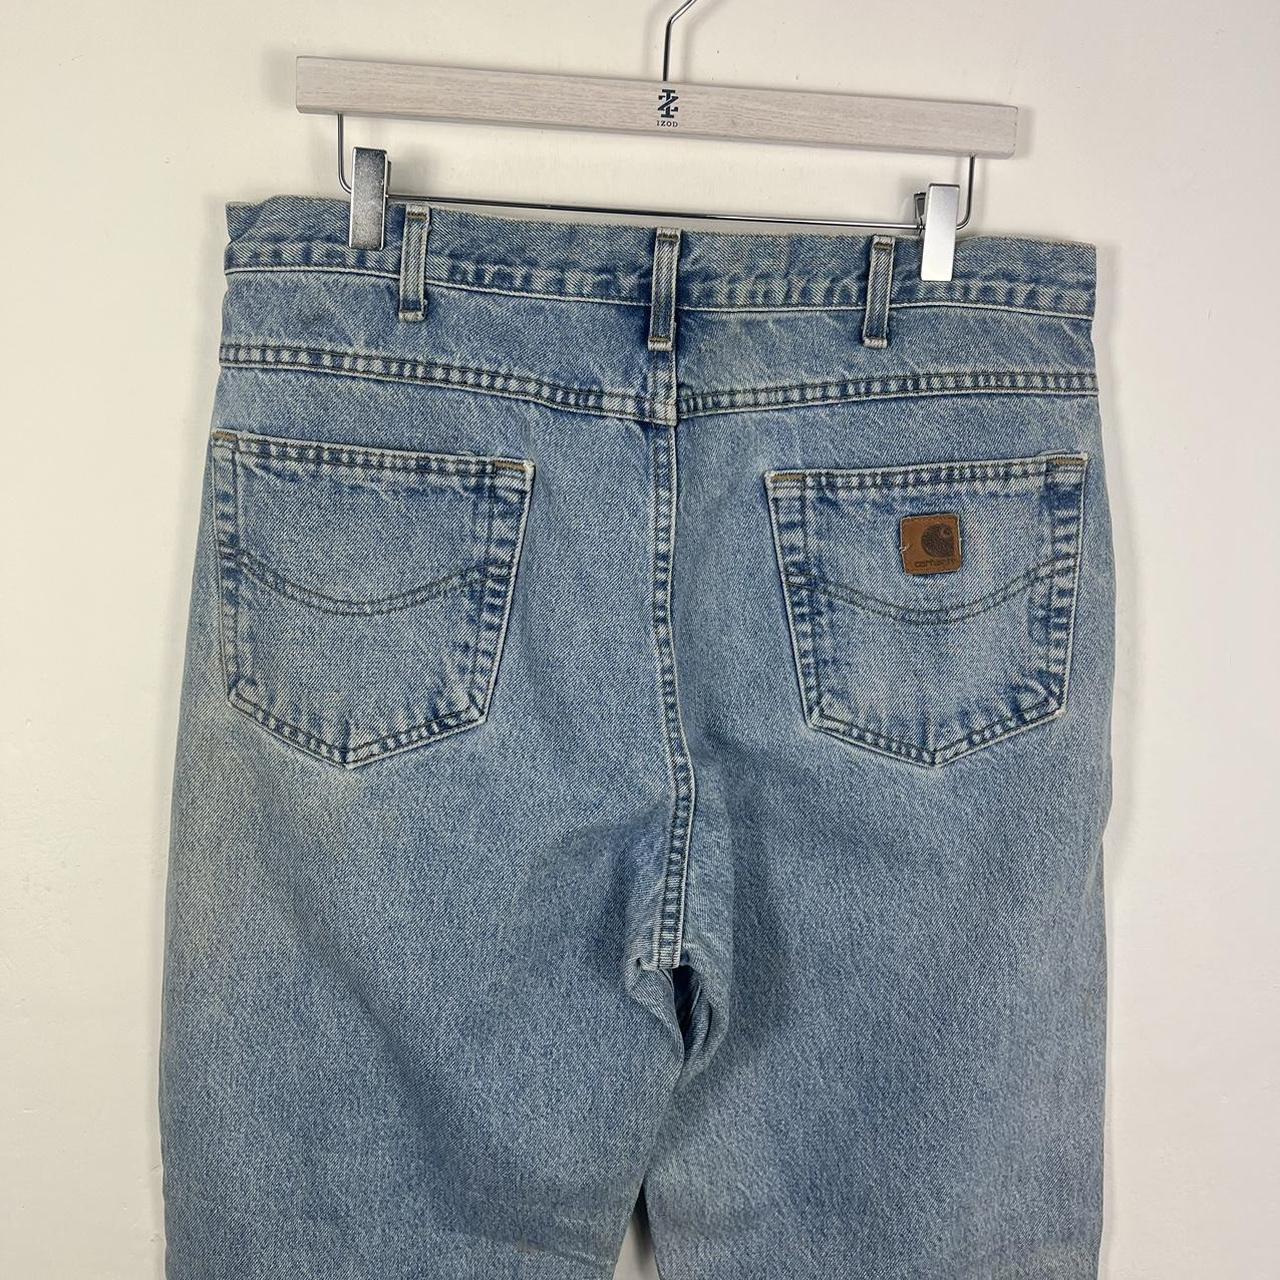 Carhartt jeans 38x34